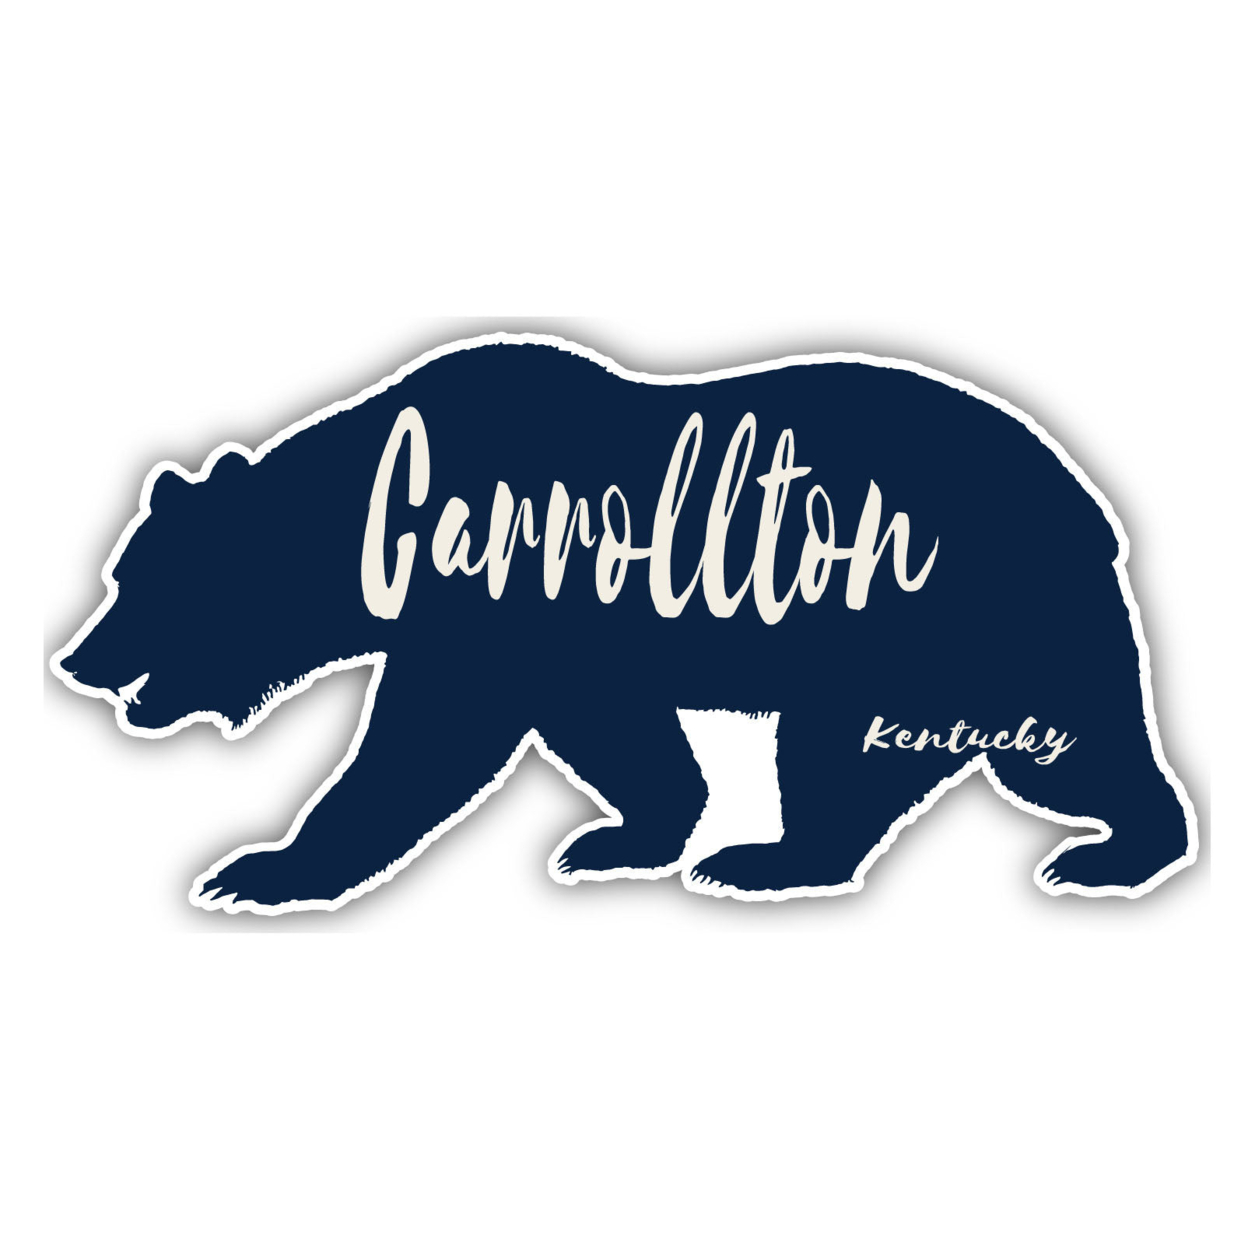 Carrollton Kentucky Souvenir Decorative Stickers (Choose Theme And Size) - 4-Pack, 10-Inch, Bear